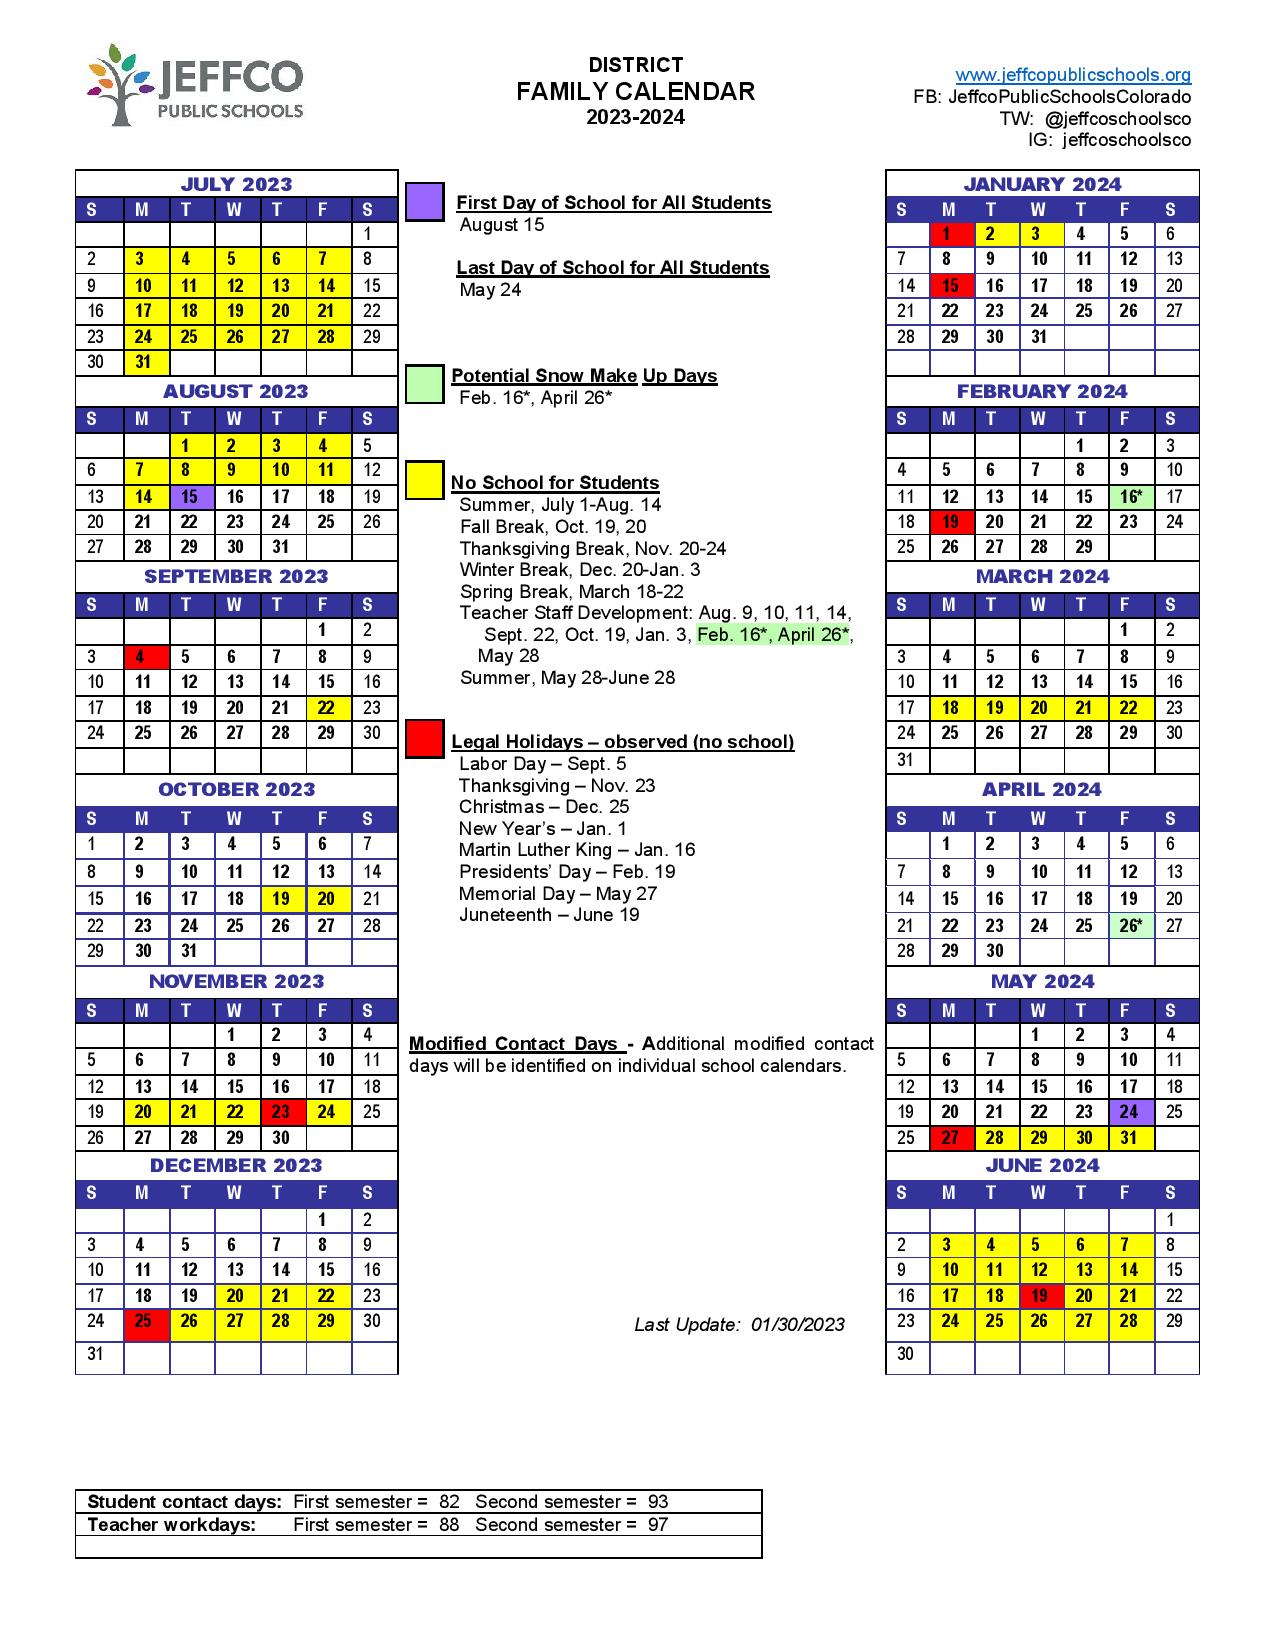 jeffco-public-schools-calendar-2022-2023-holidays